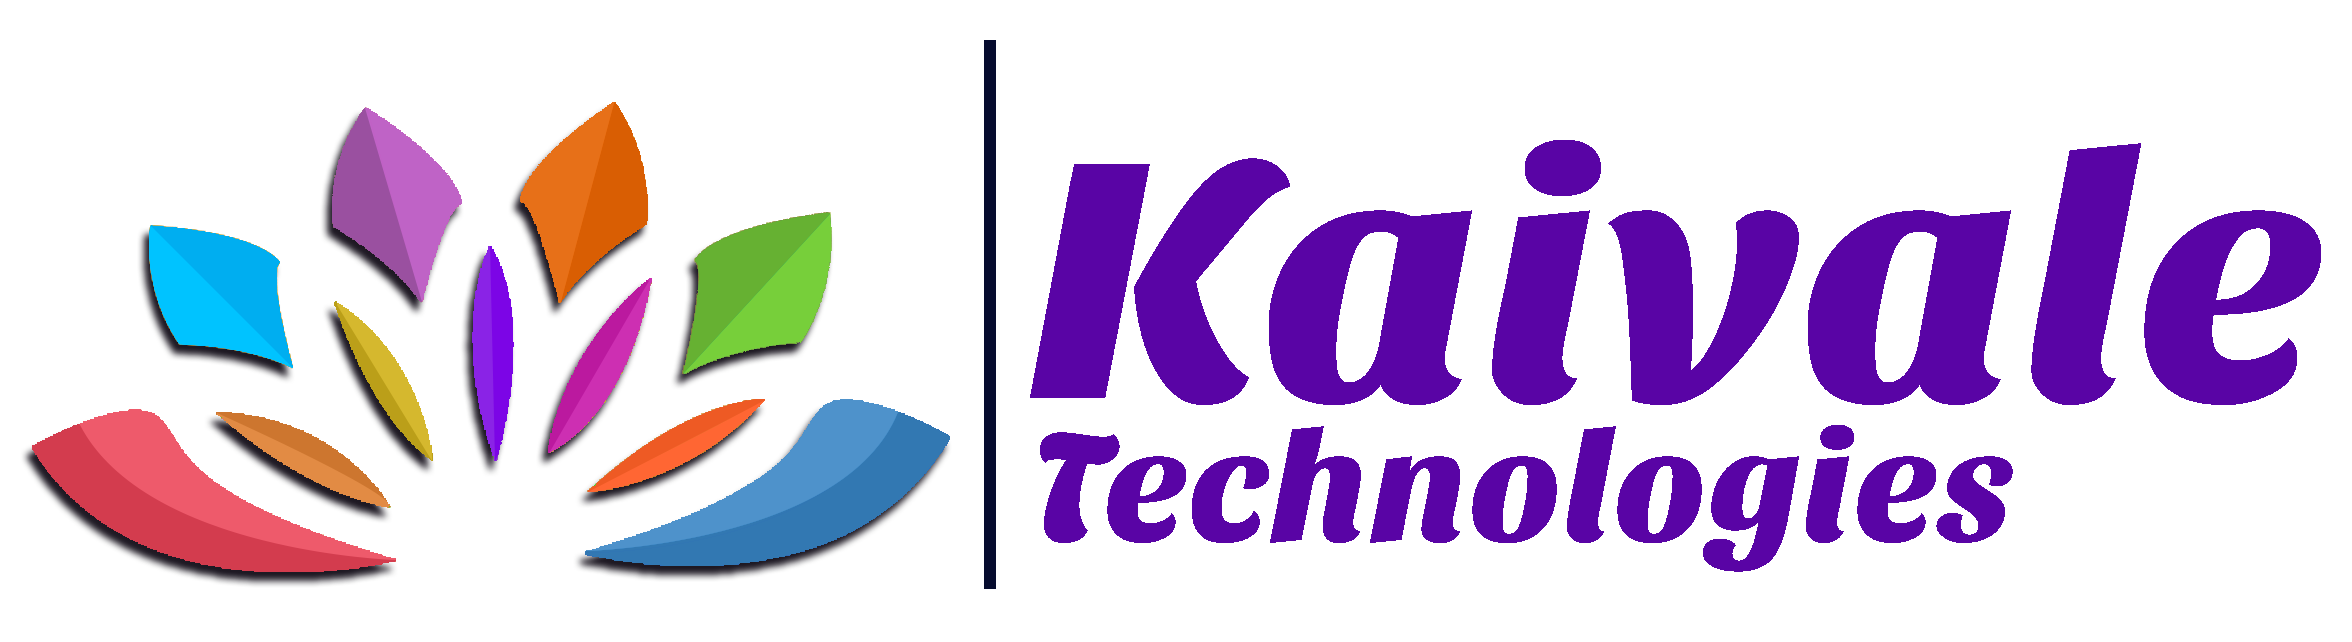 Kaivale Technologies